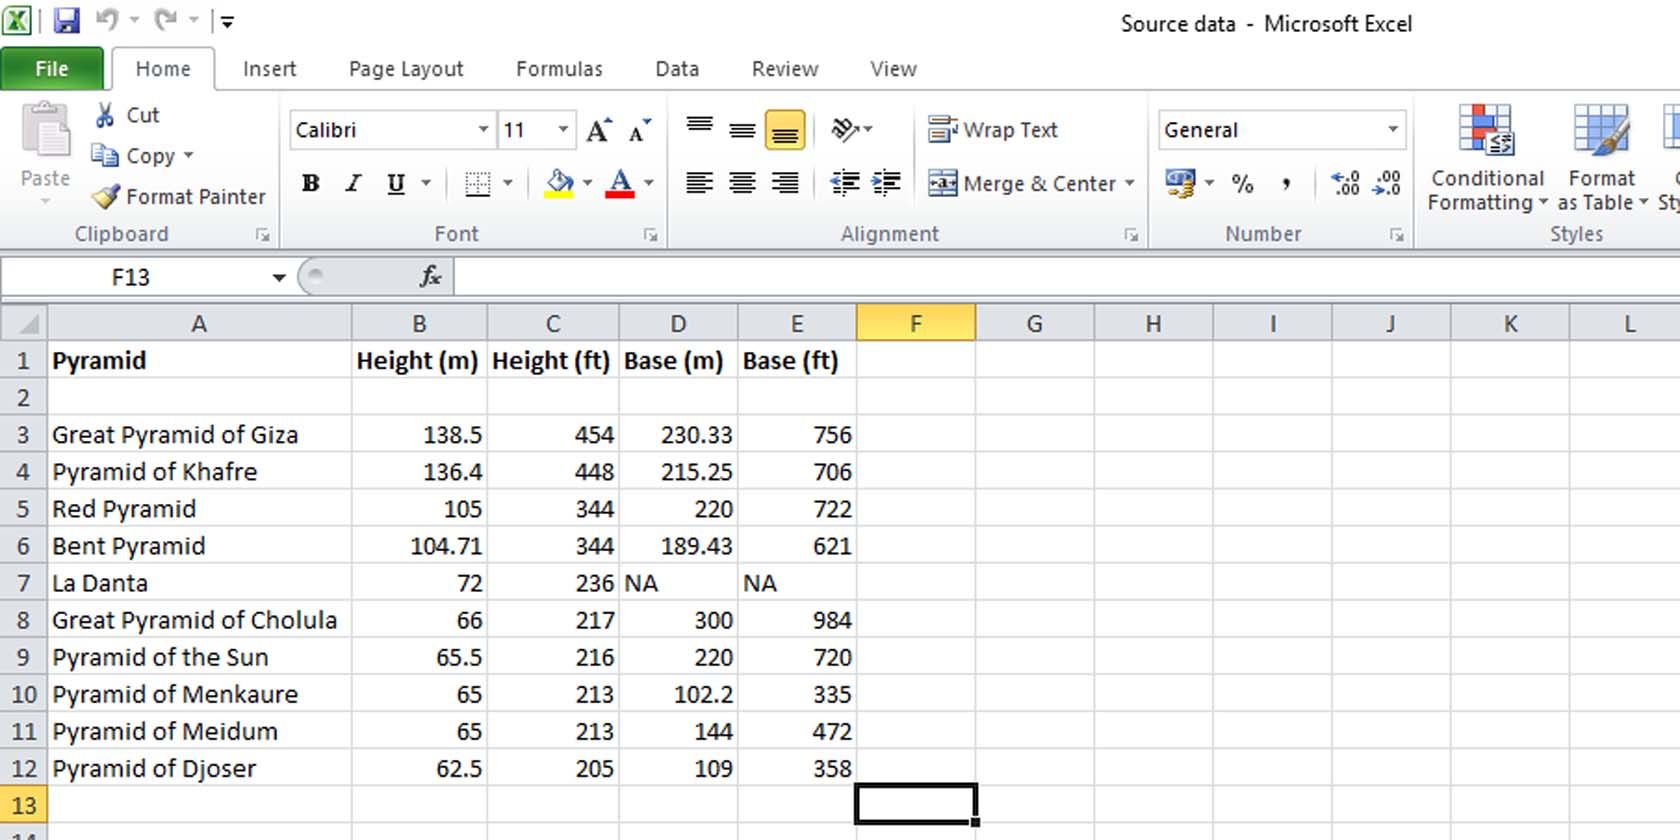 Microsoft Excel data source file